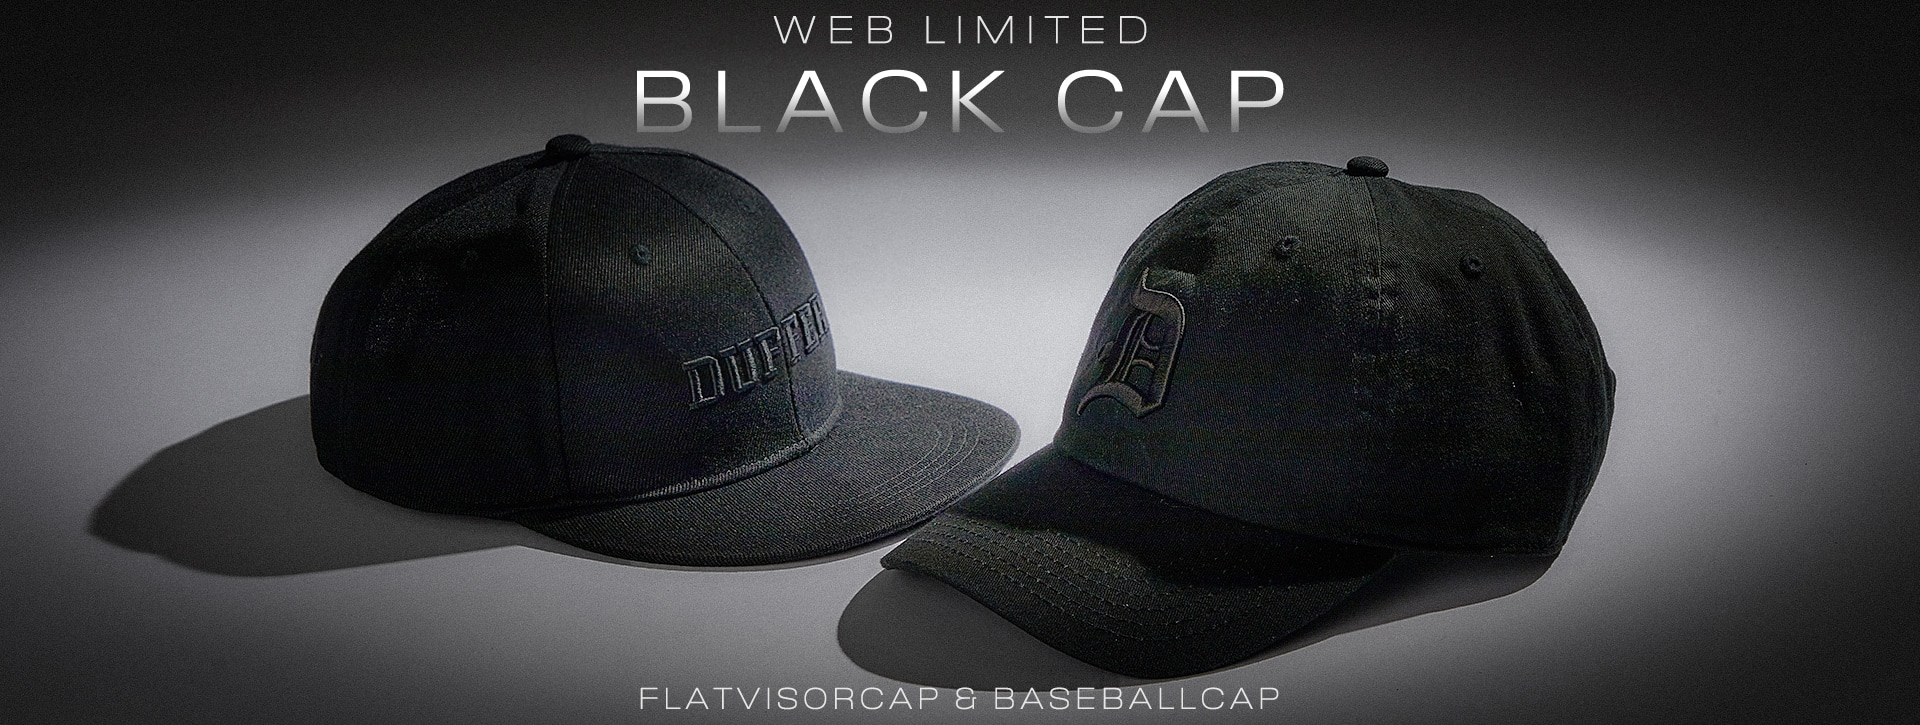 blackcap